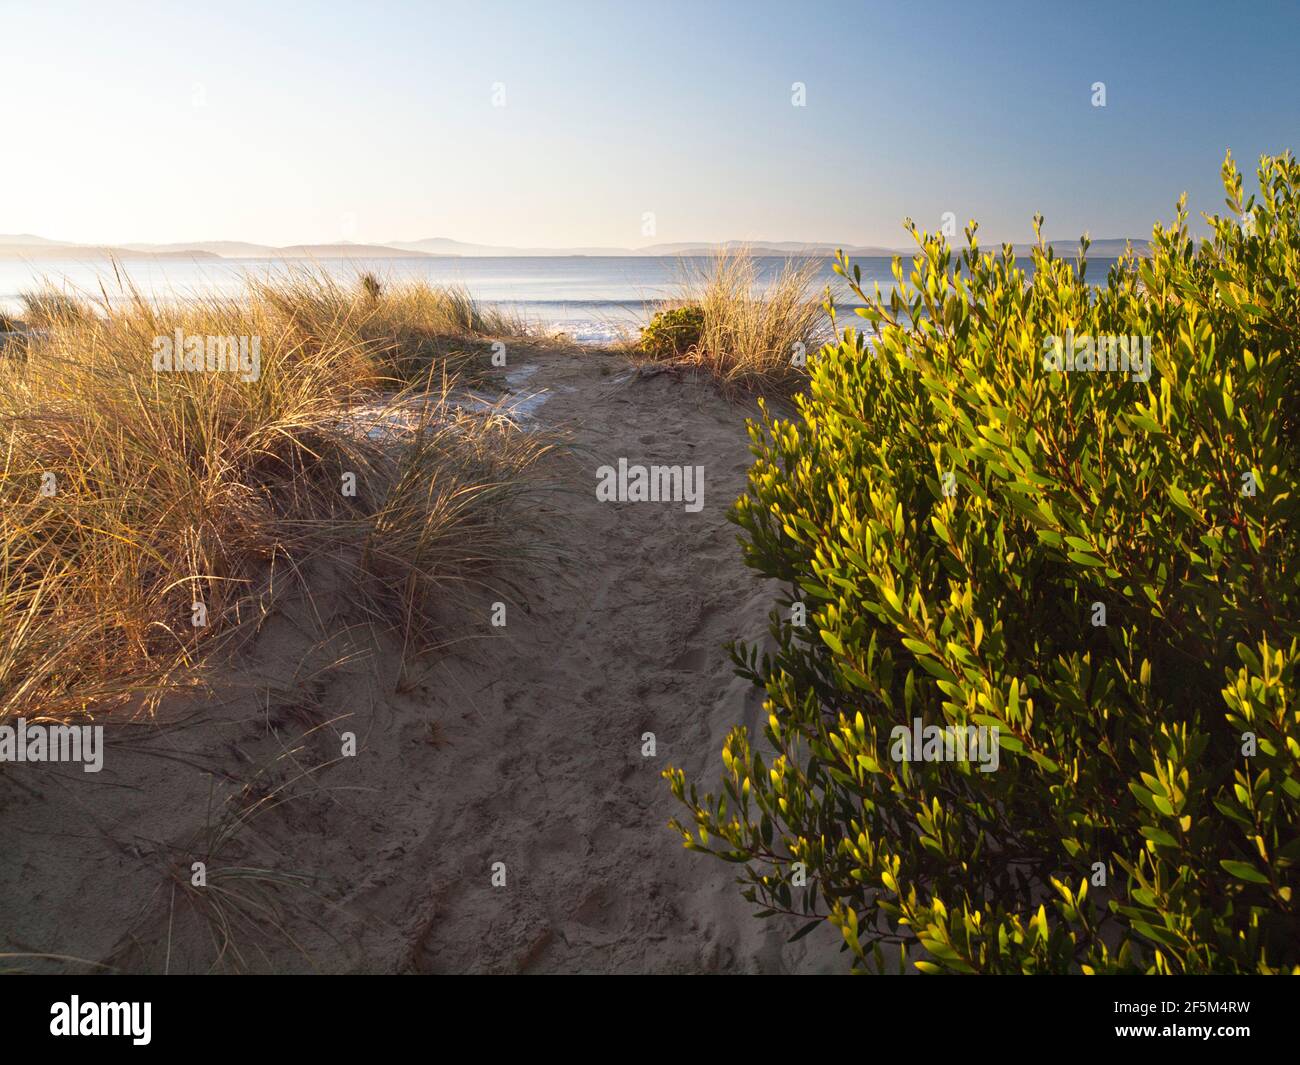 Marram grass (Ammophila arenaria) and Acacia longifolia sophorae on dunes under revegetation at Seven Mile Beach near Hobart, Tasmania, Australia Stock Photo